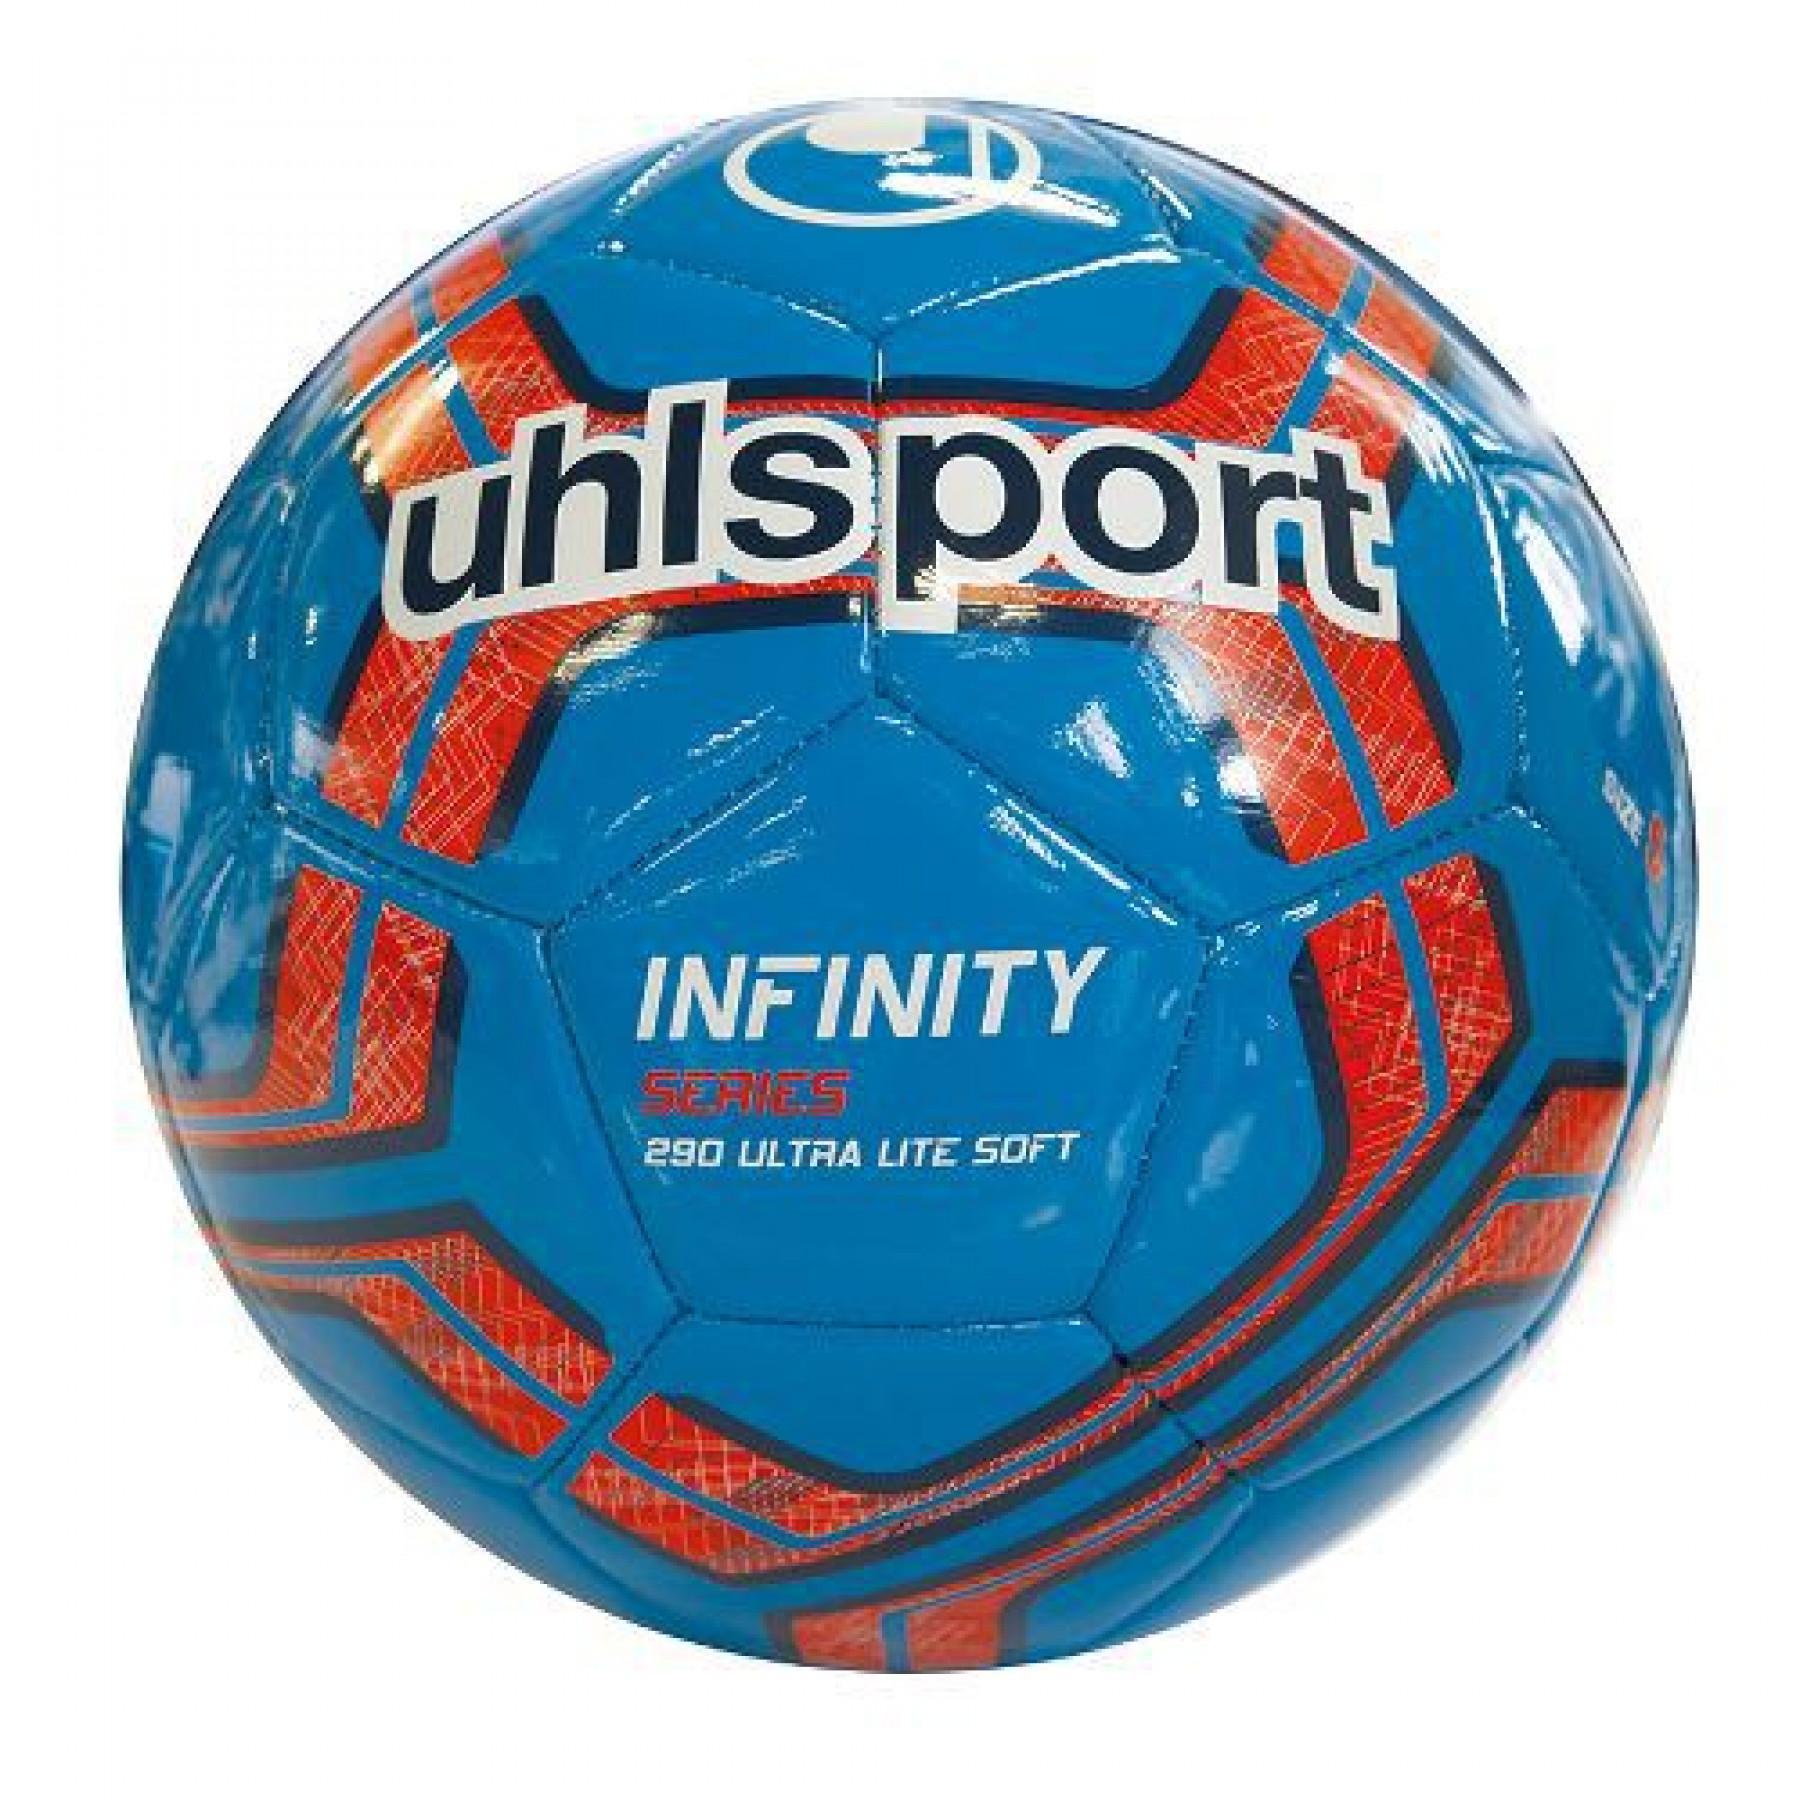 Balloon Uhlsport Infinity 290 Ultra Lite Soft